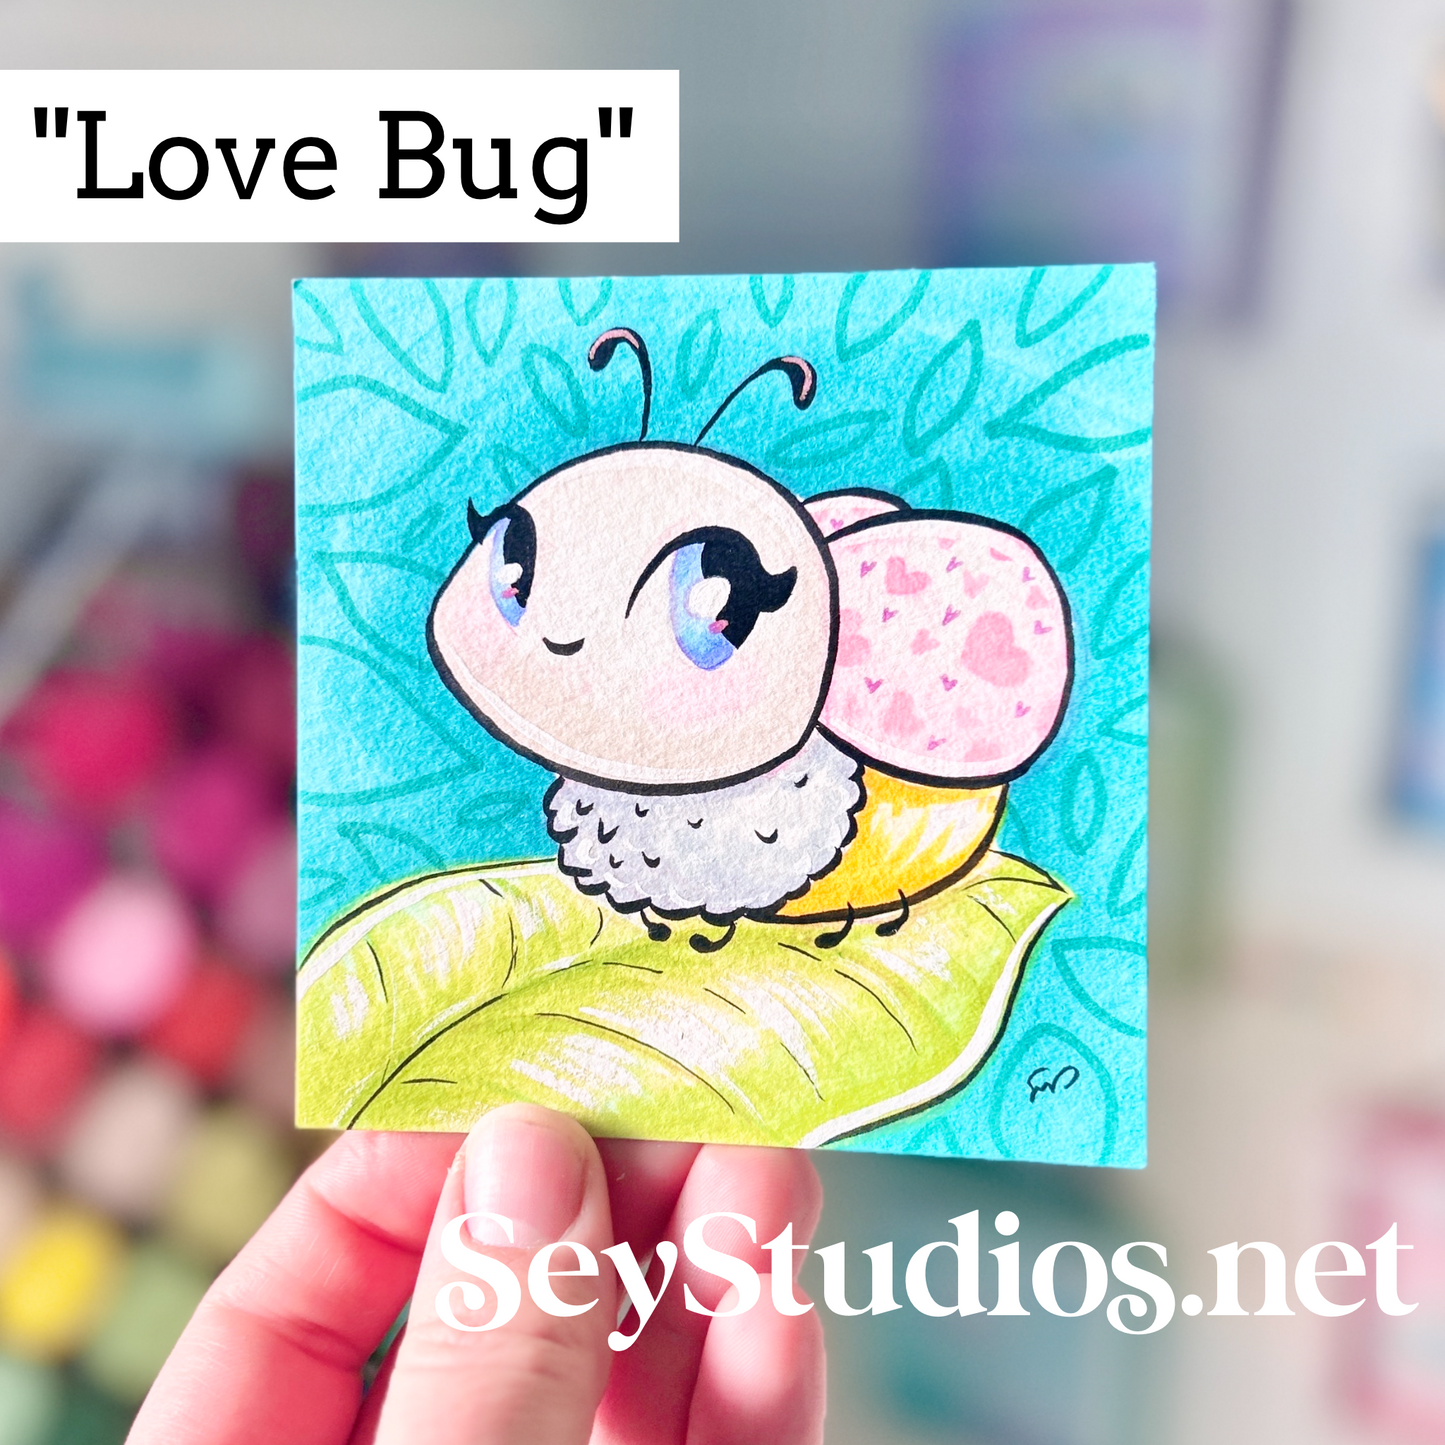 Original - "Love Bug” Sketch